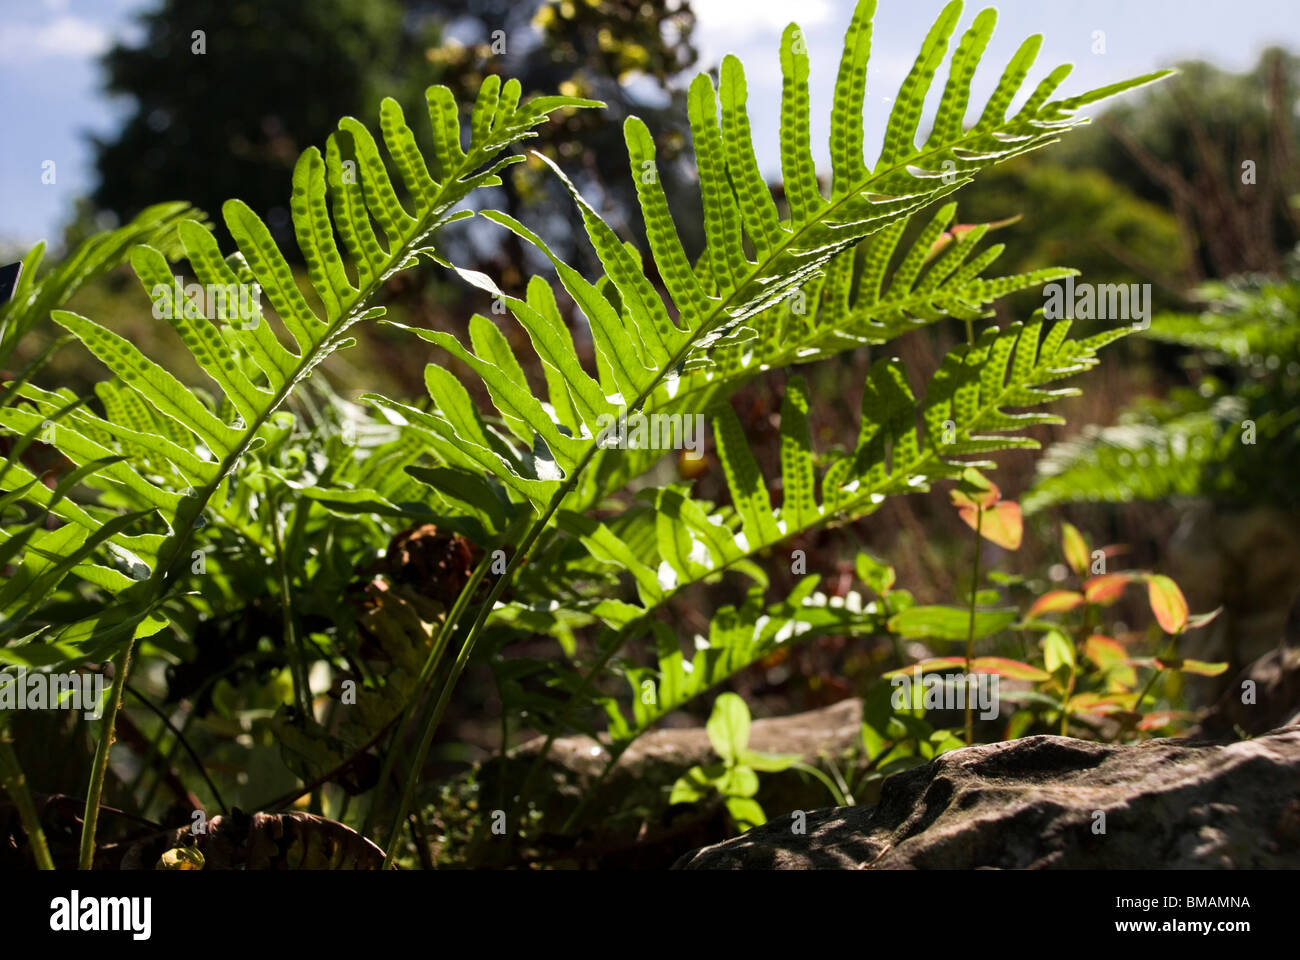 Polypodium cambricum, Southern polypody fern. Stock Photo